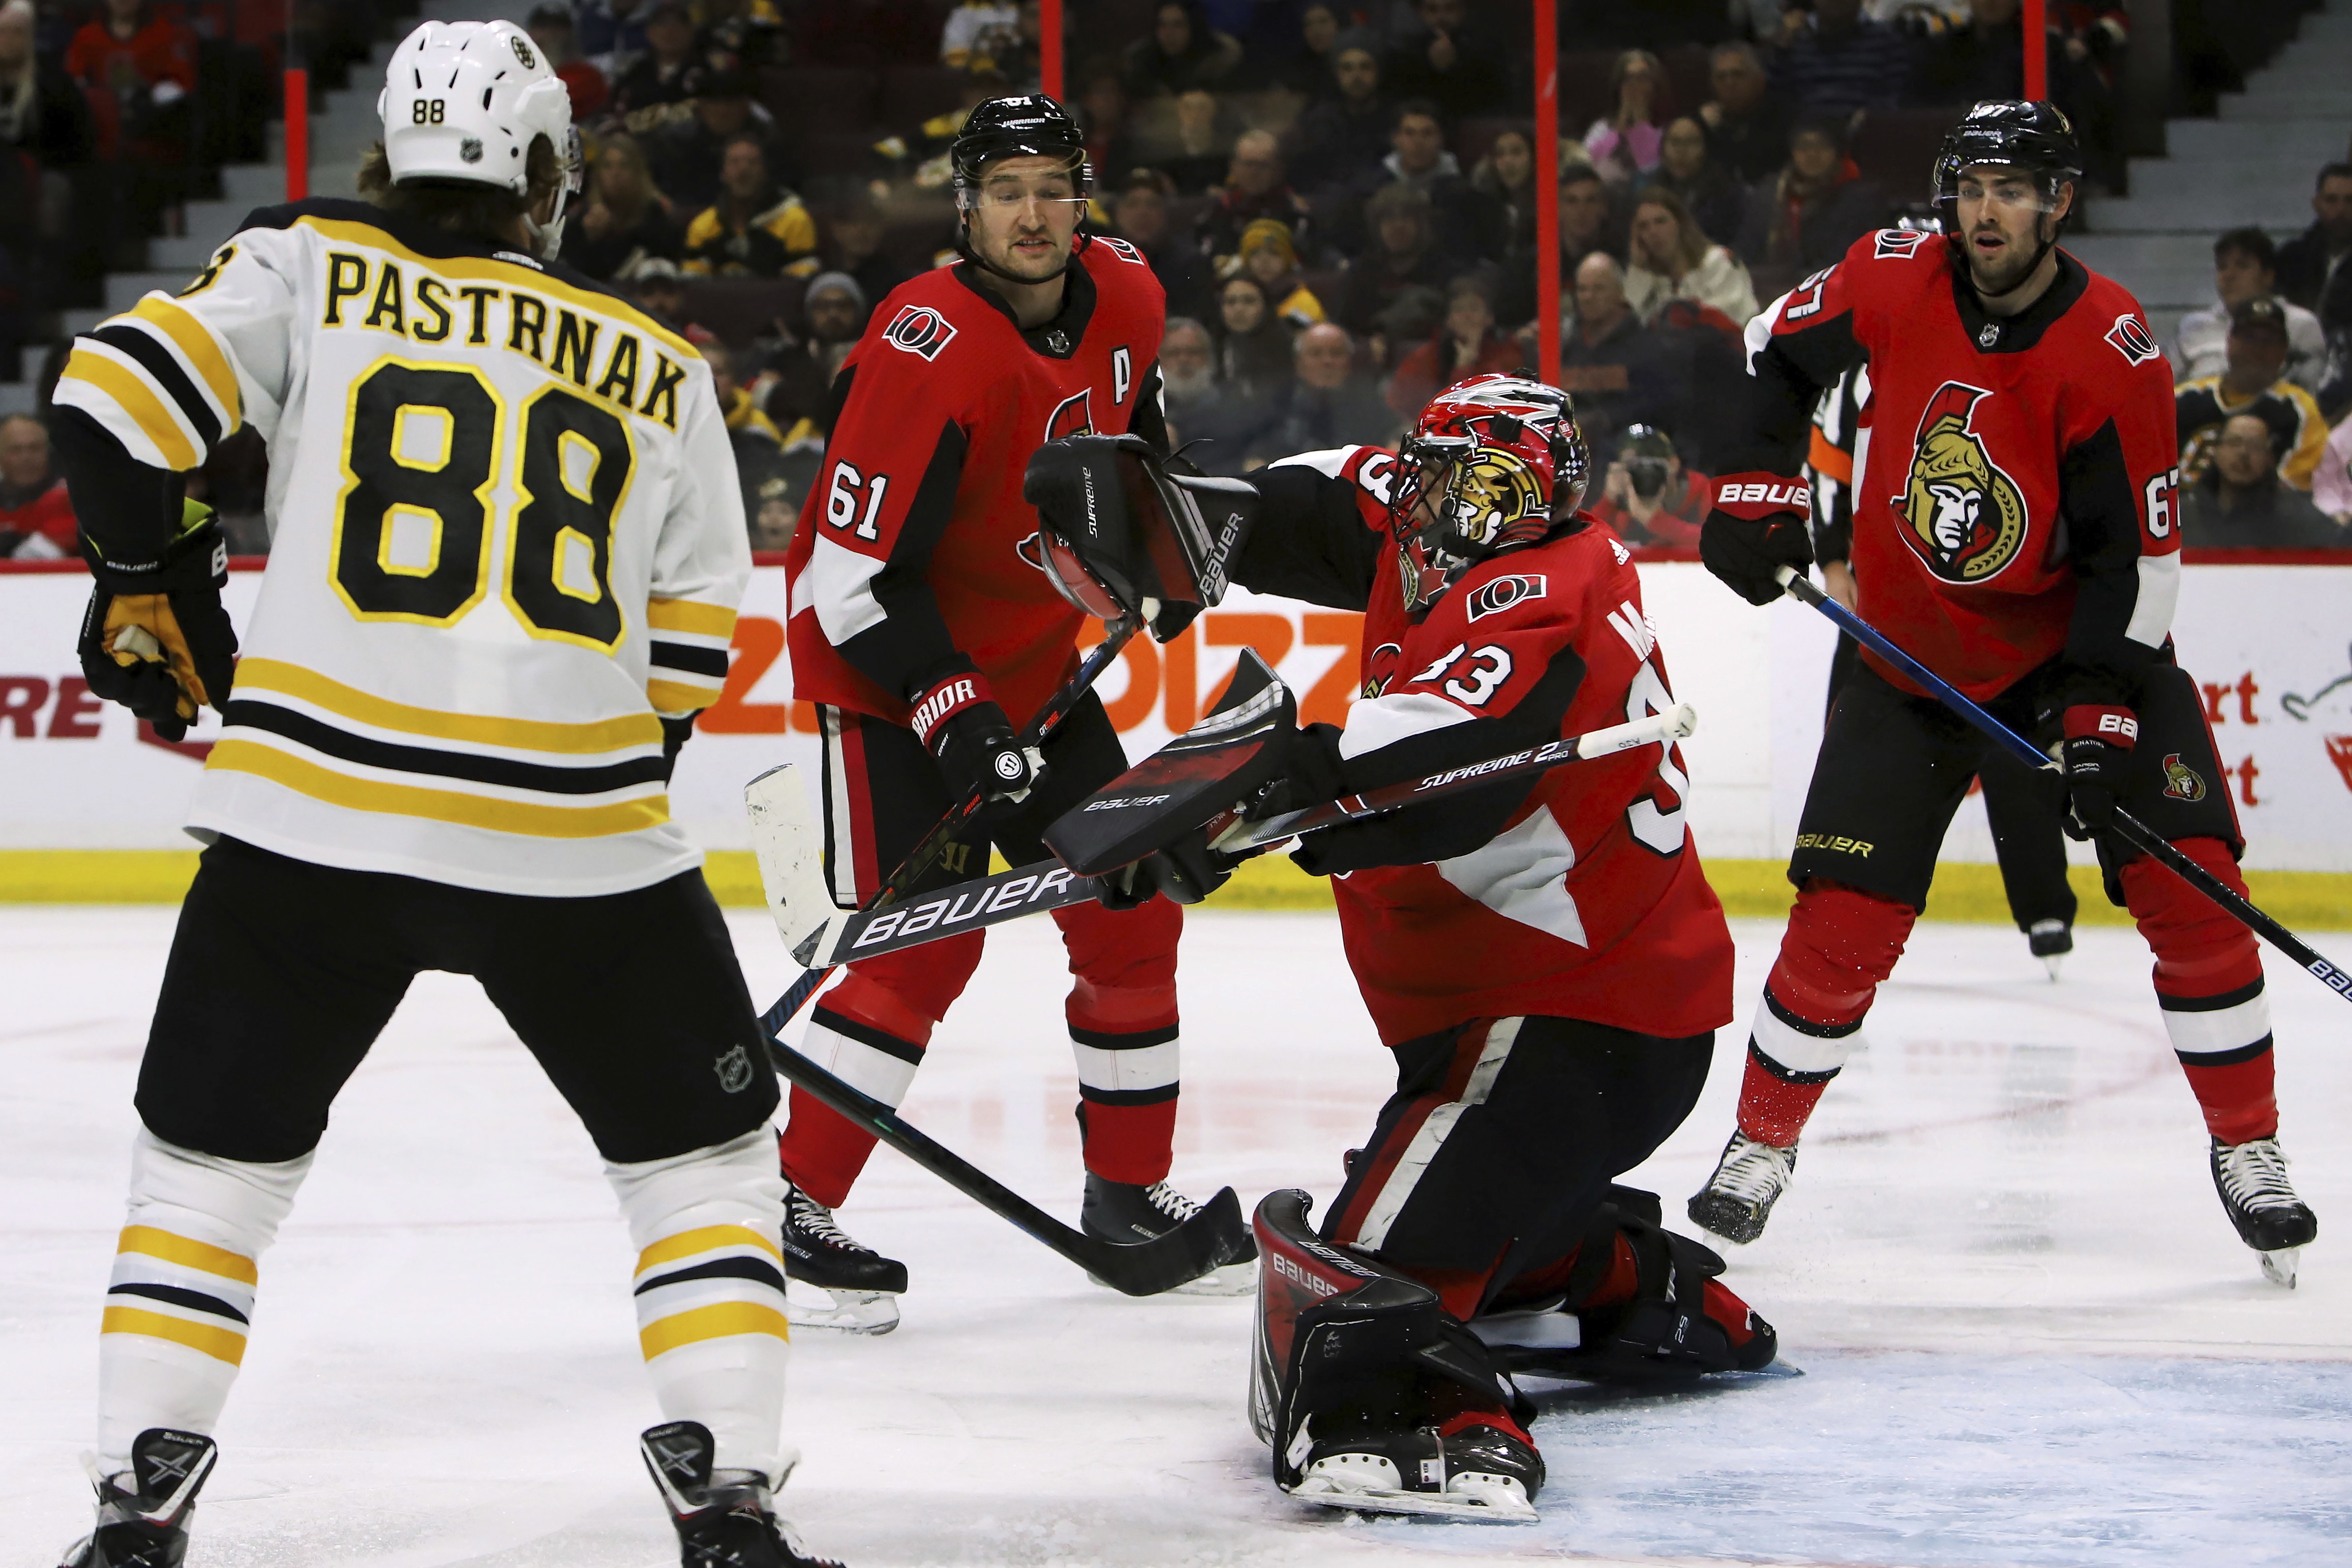 Krug scores in OT to lift Bruins over Senators 2-1